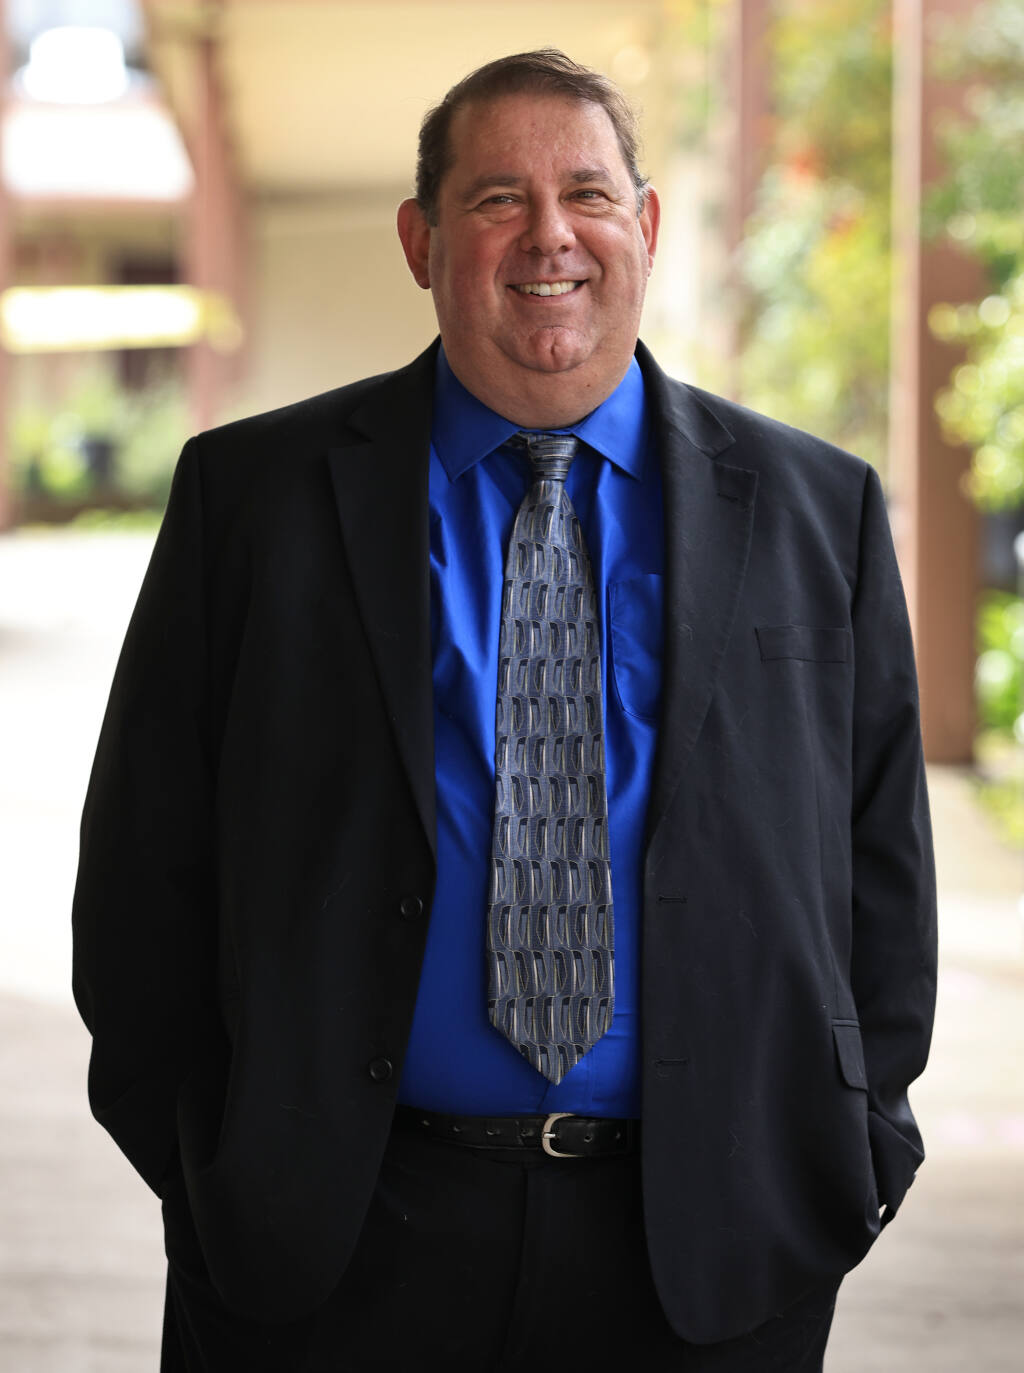 Brad Coscarelli is running for Sonoma County superintendent of schools, Thursday, Dec. 30, 2021. He is the principal of Hidden Valley Elementary School in Santa Rosa. (Kent Porter / The Press Democrat)